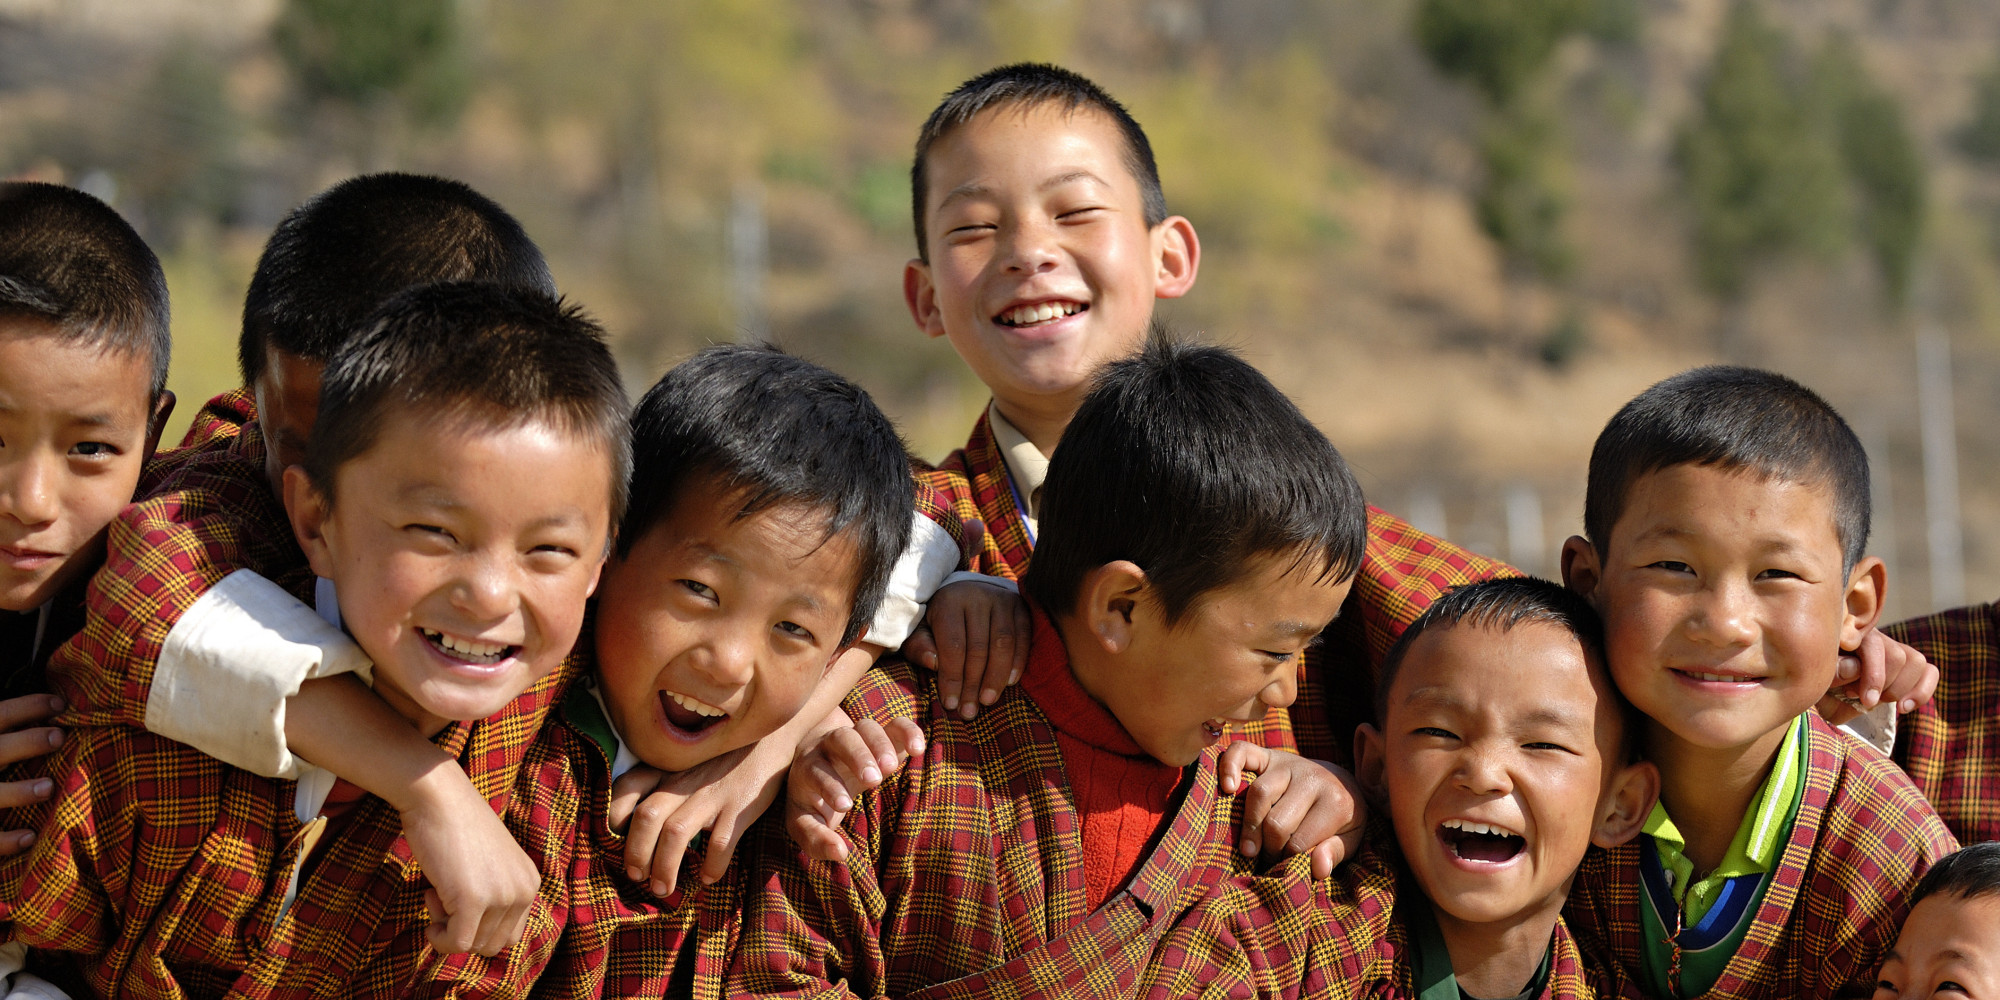 The happy kids from Bhutan